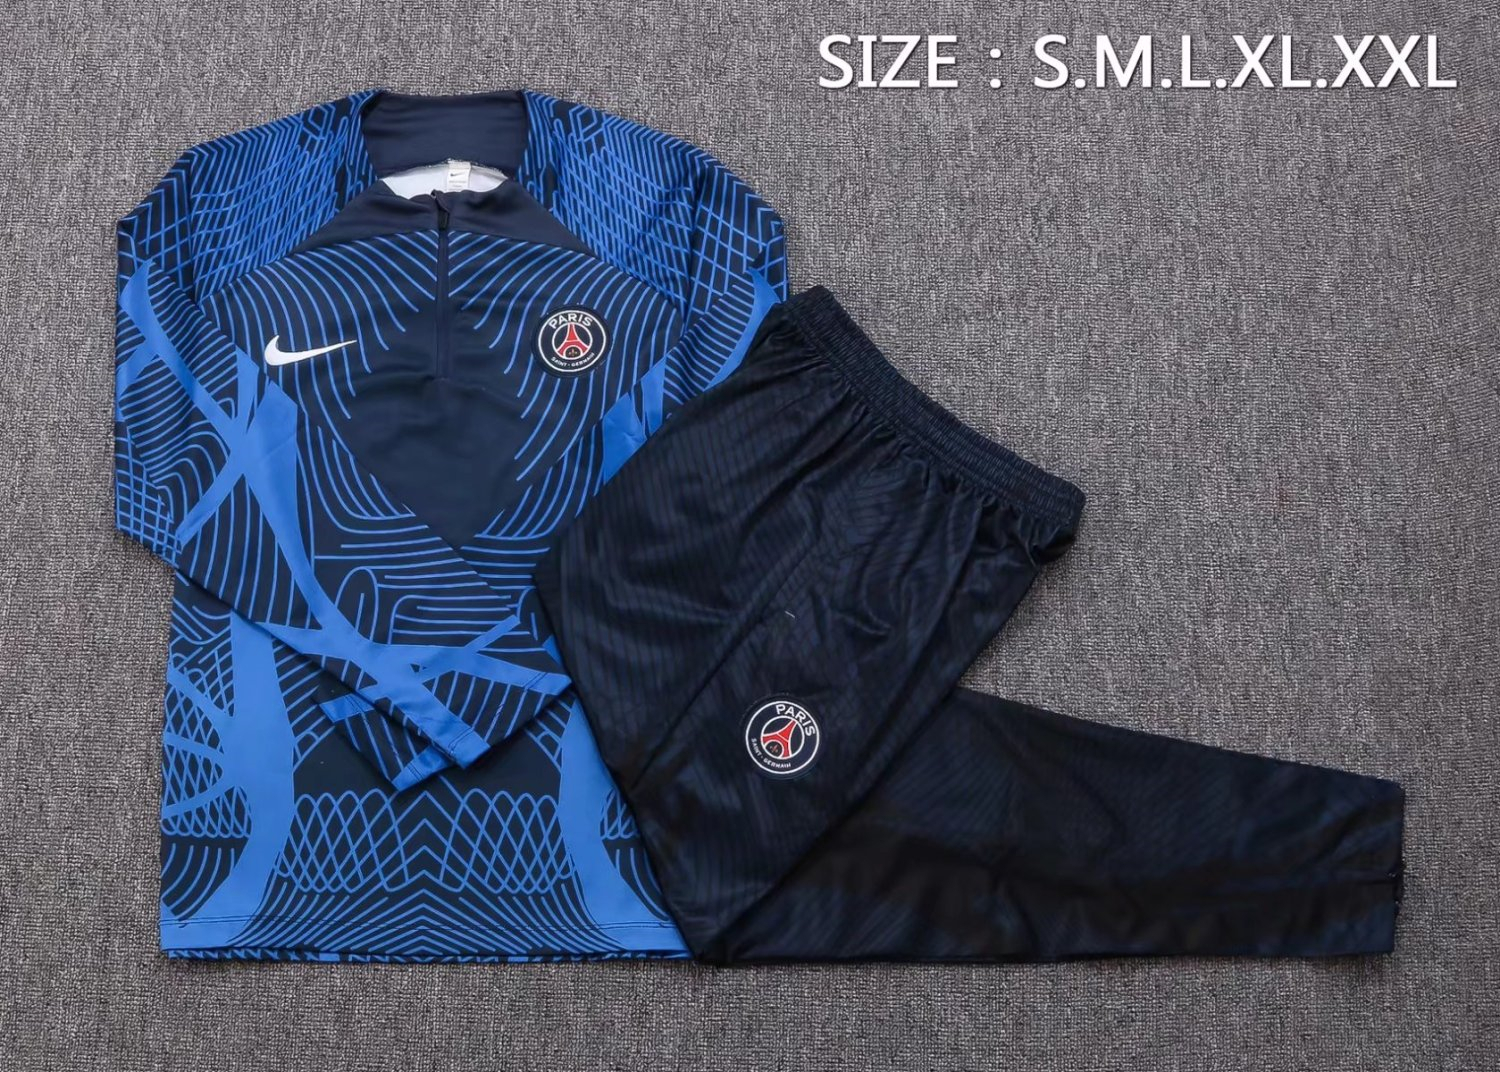 PSG Soccer Training Suit Navy 3D Print 2022/23 Mens